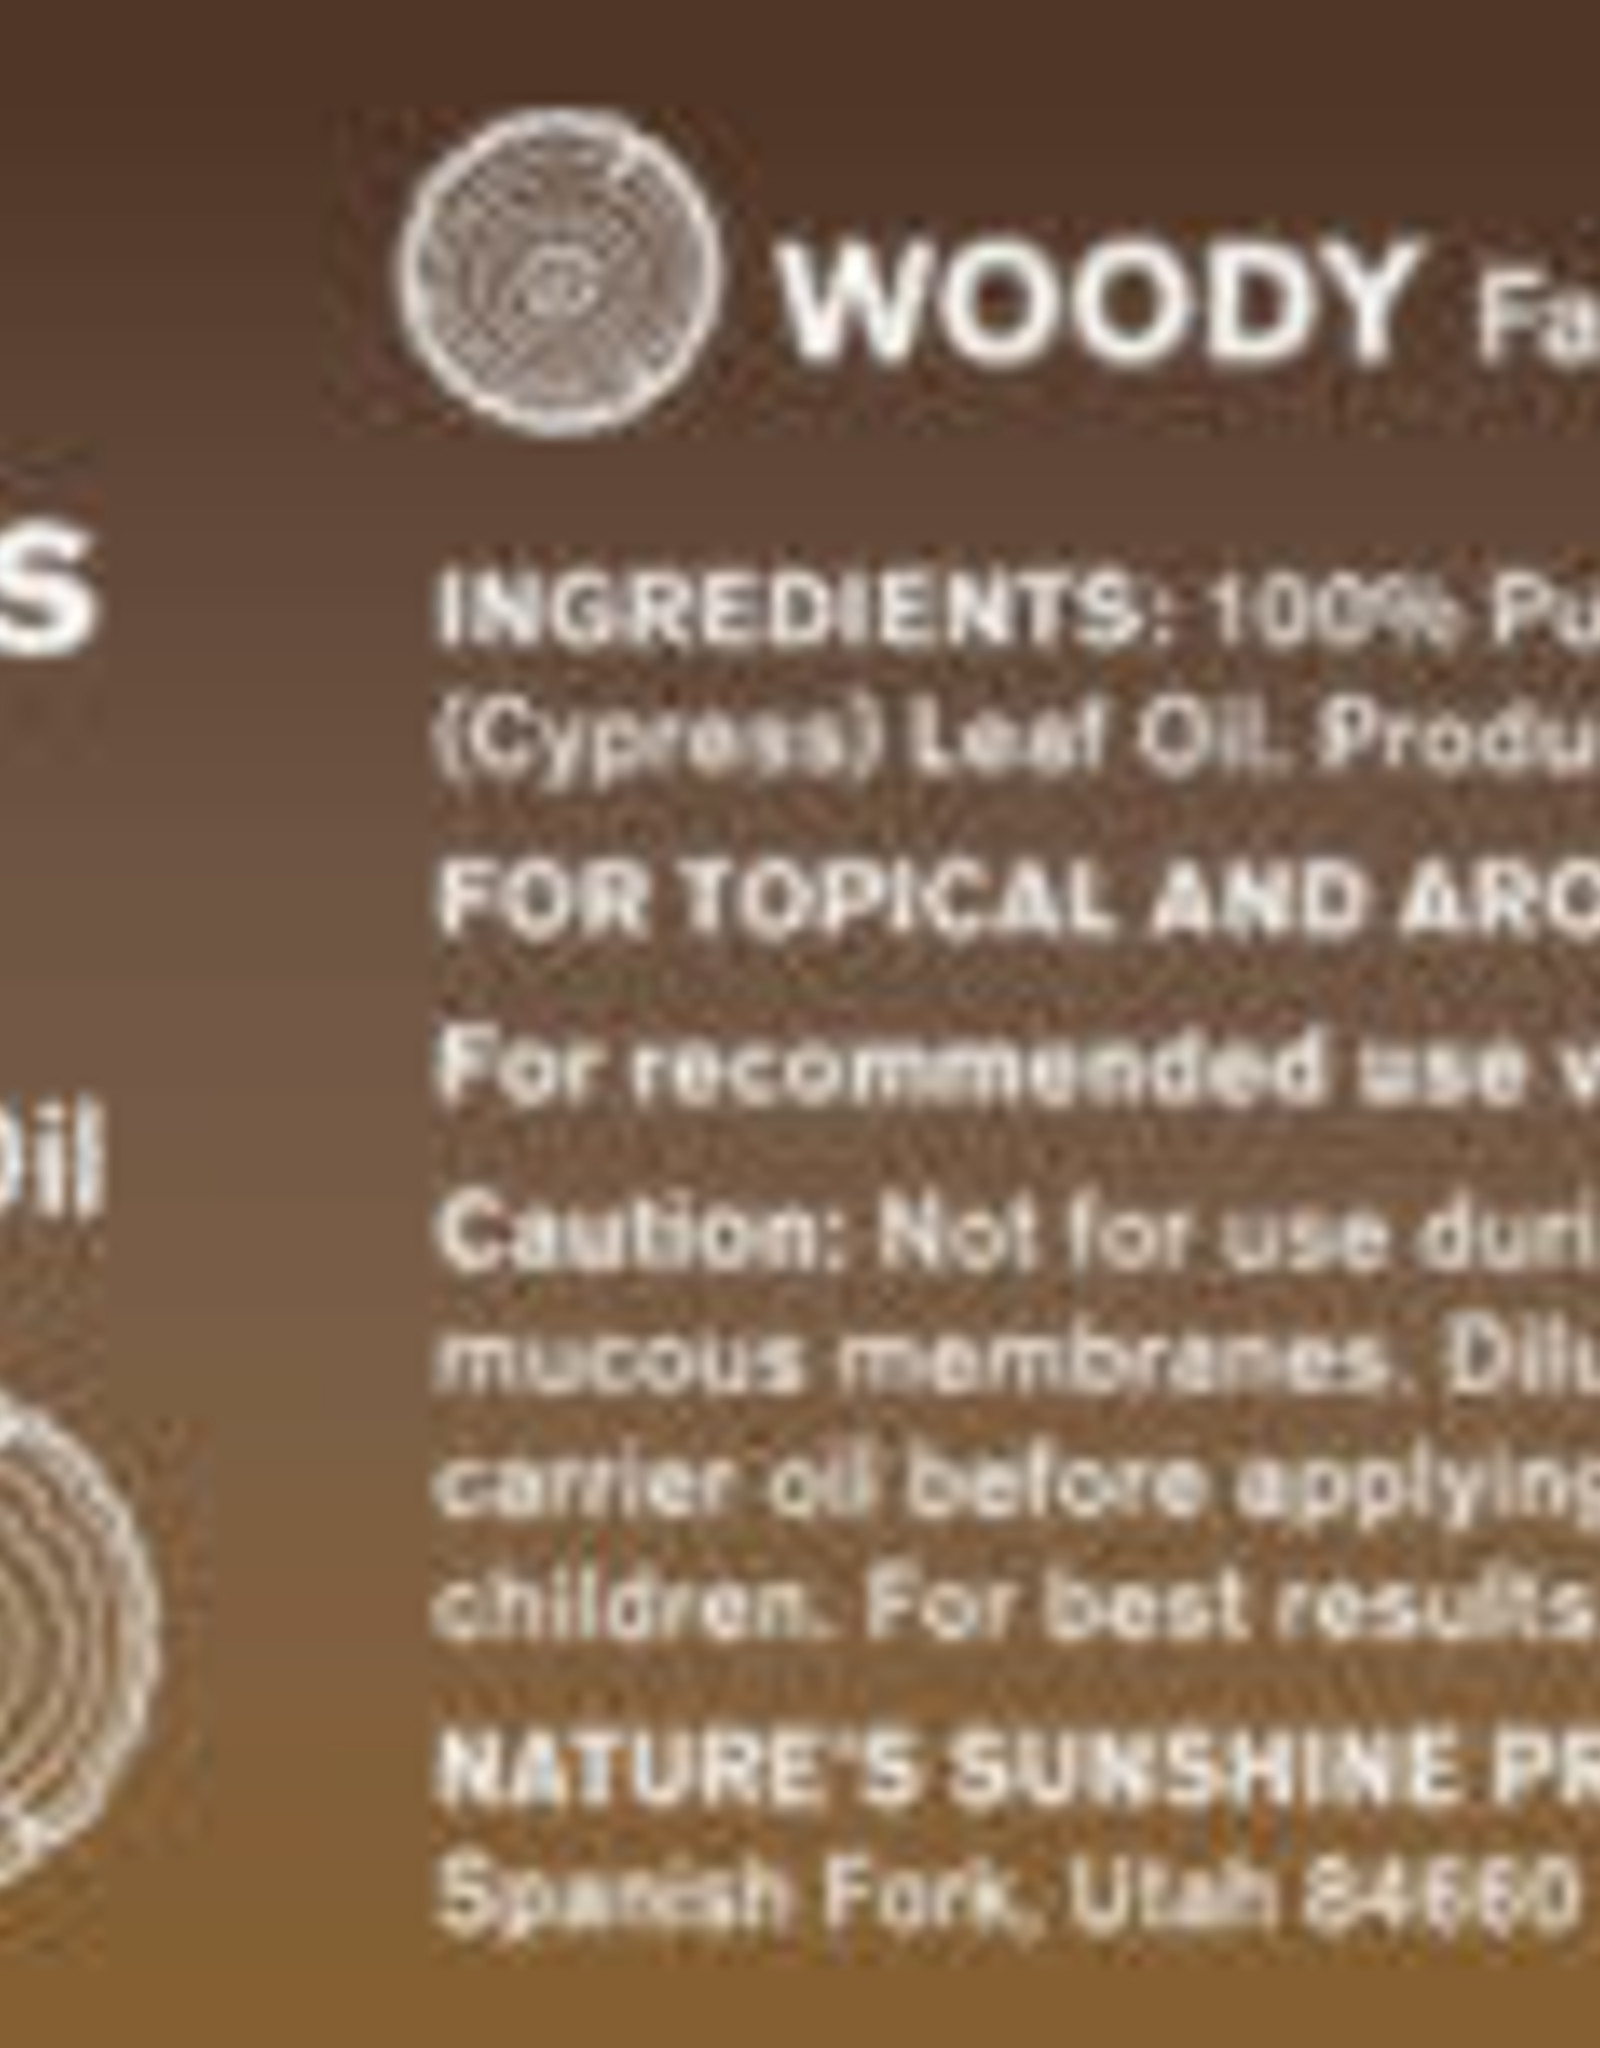 Nature's Sunshine Cypress Oil